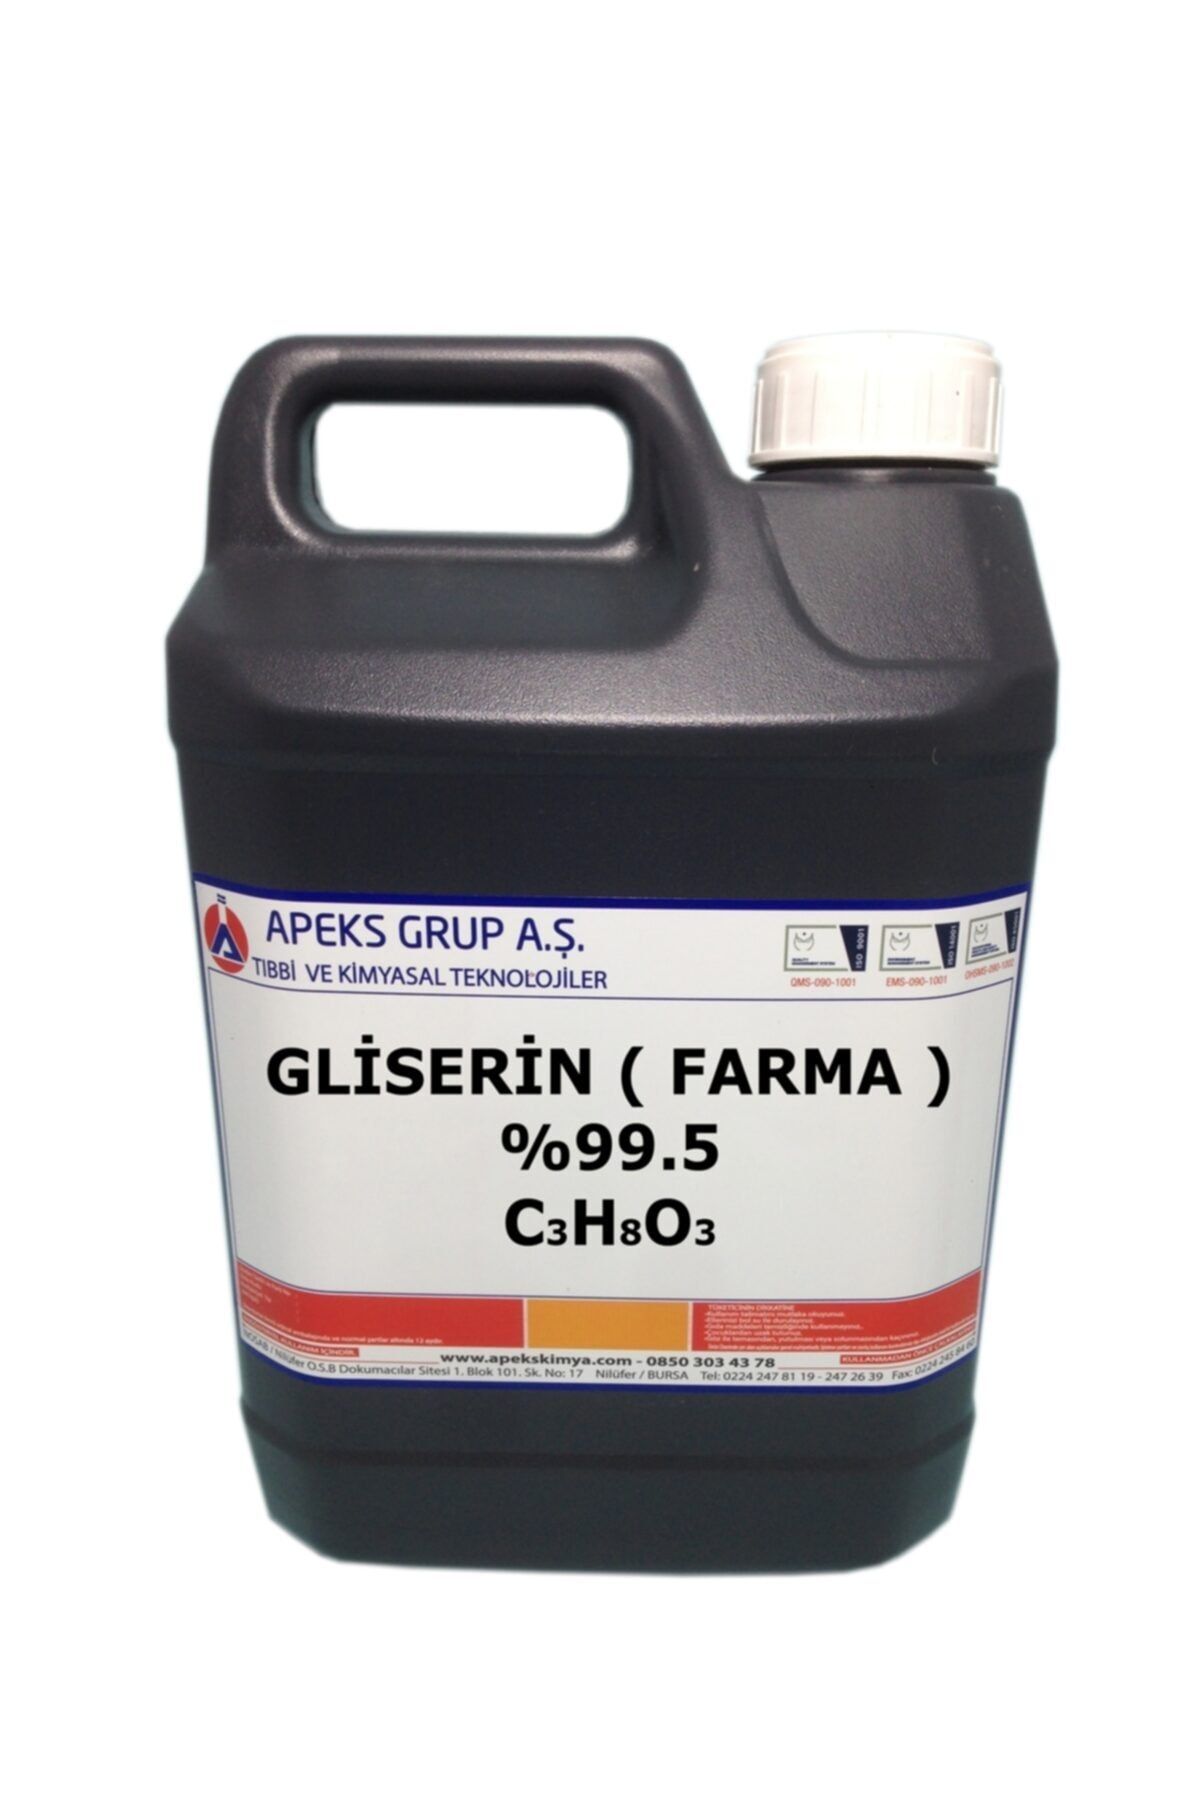 APEKS Gliserin  Farma  - %99.5 - C3h8o3 - 5 kg